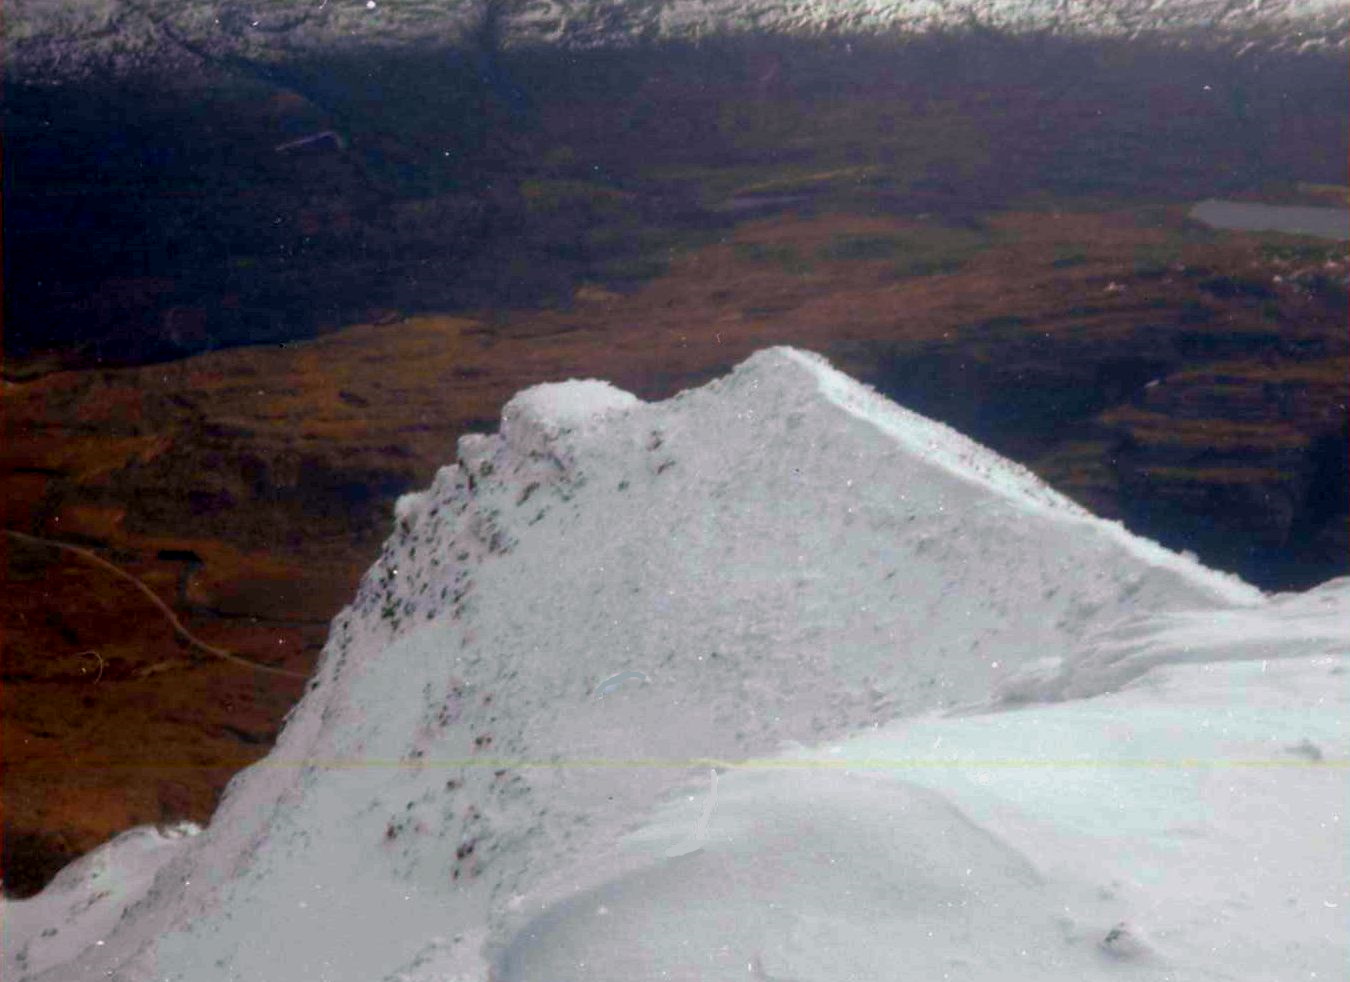 Snow-bound Summit Ridge of Liathach in the Torridon region of the North West Highlands of Scotland